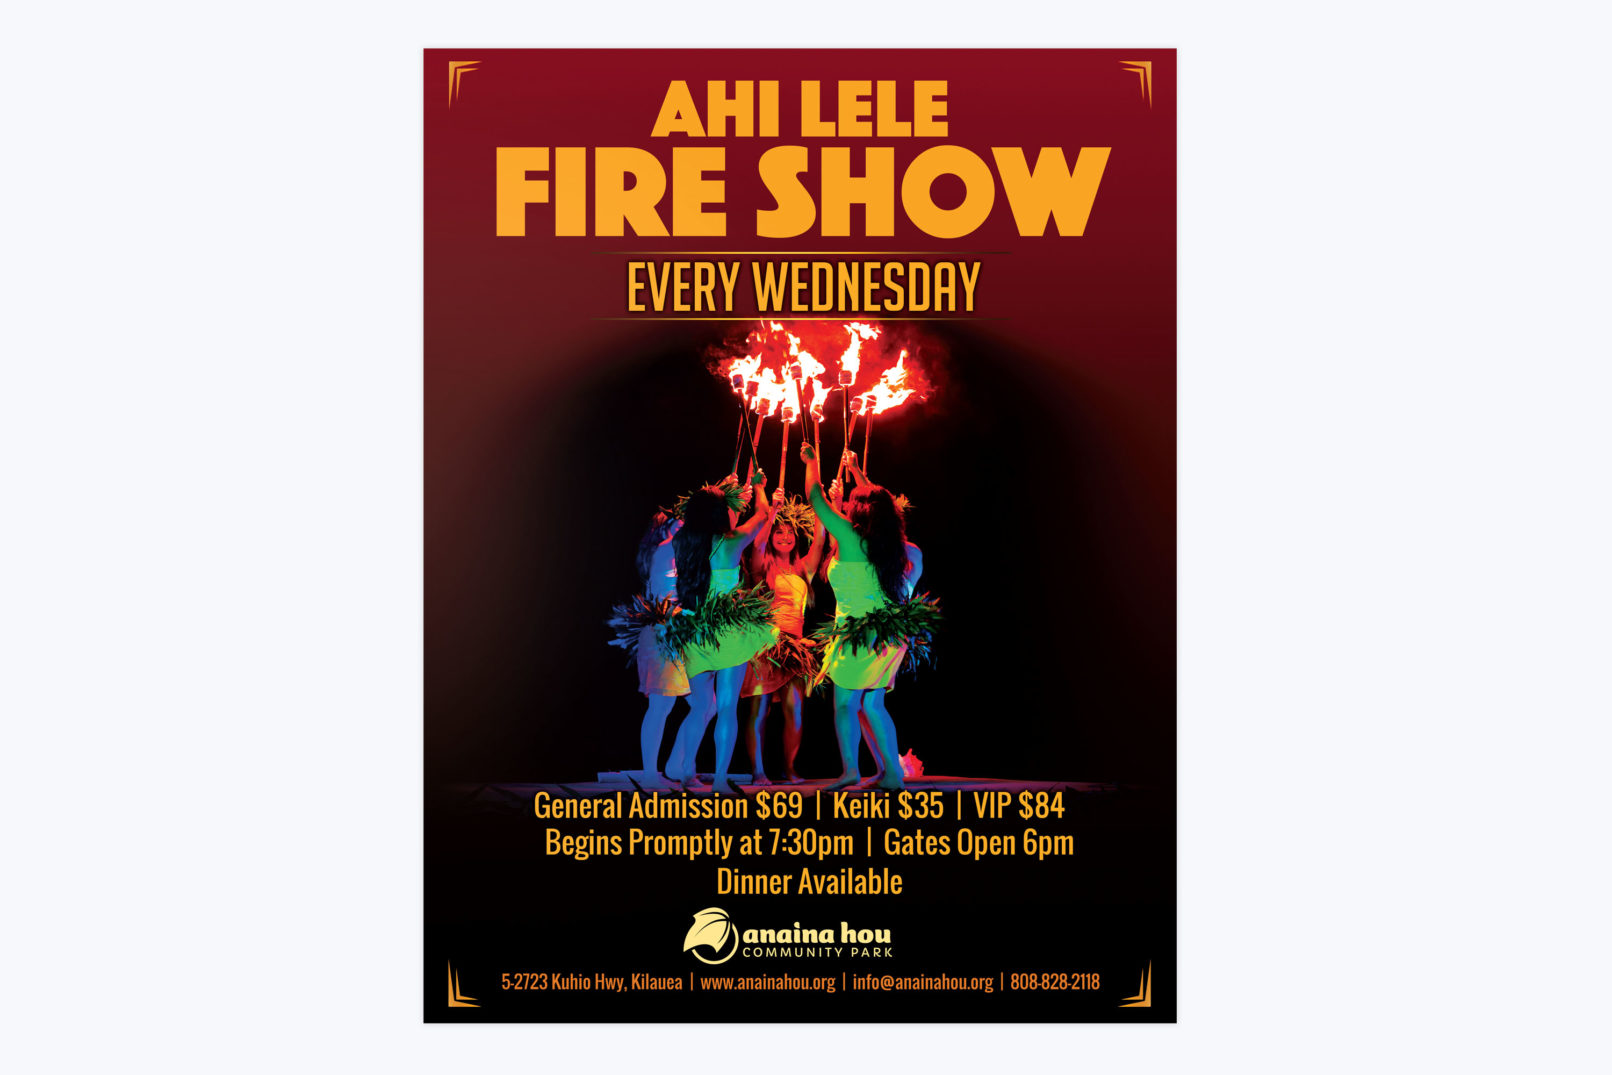 ahi lele fire show poster design